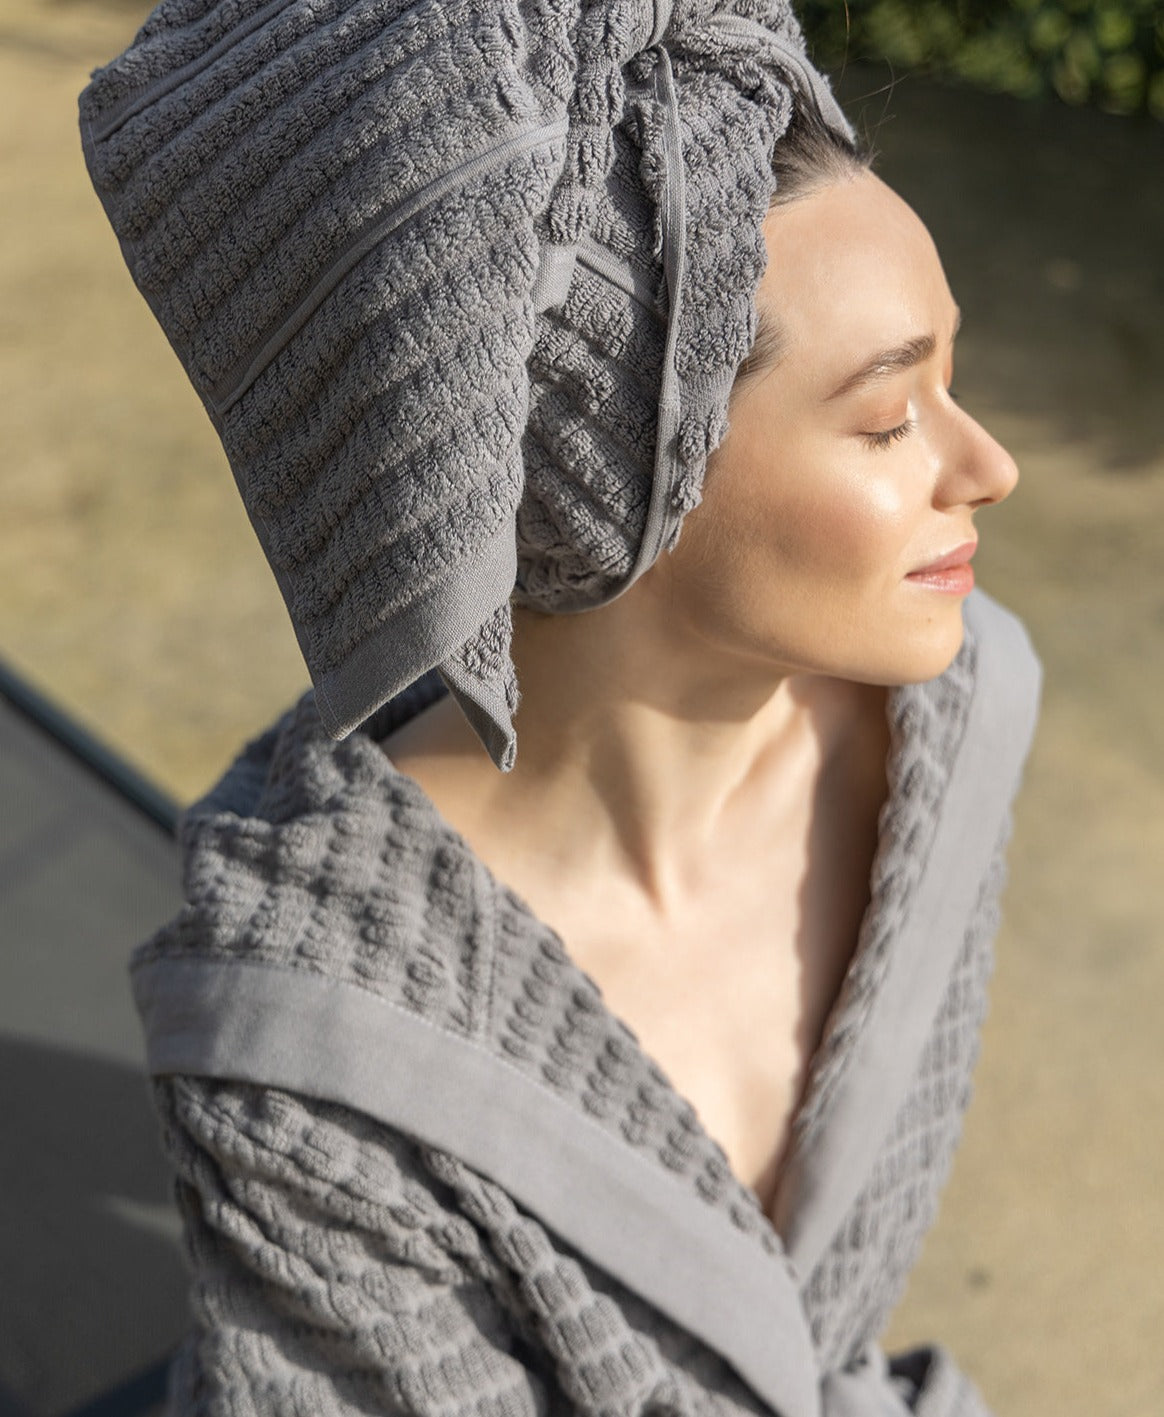 Grey Swell organic cotton bathrobe hanging neatly, highlighting its soft texture and elegant design